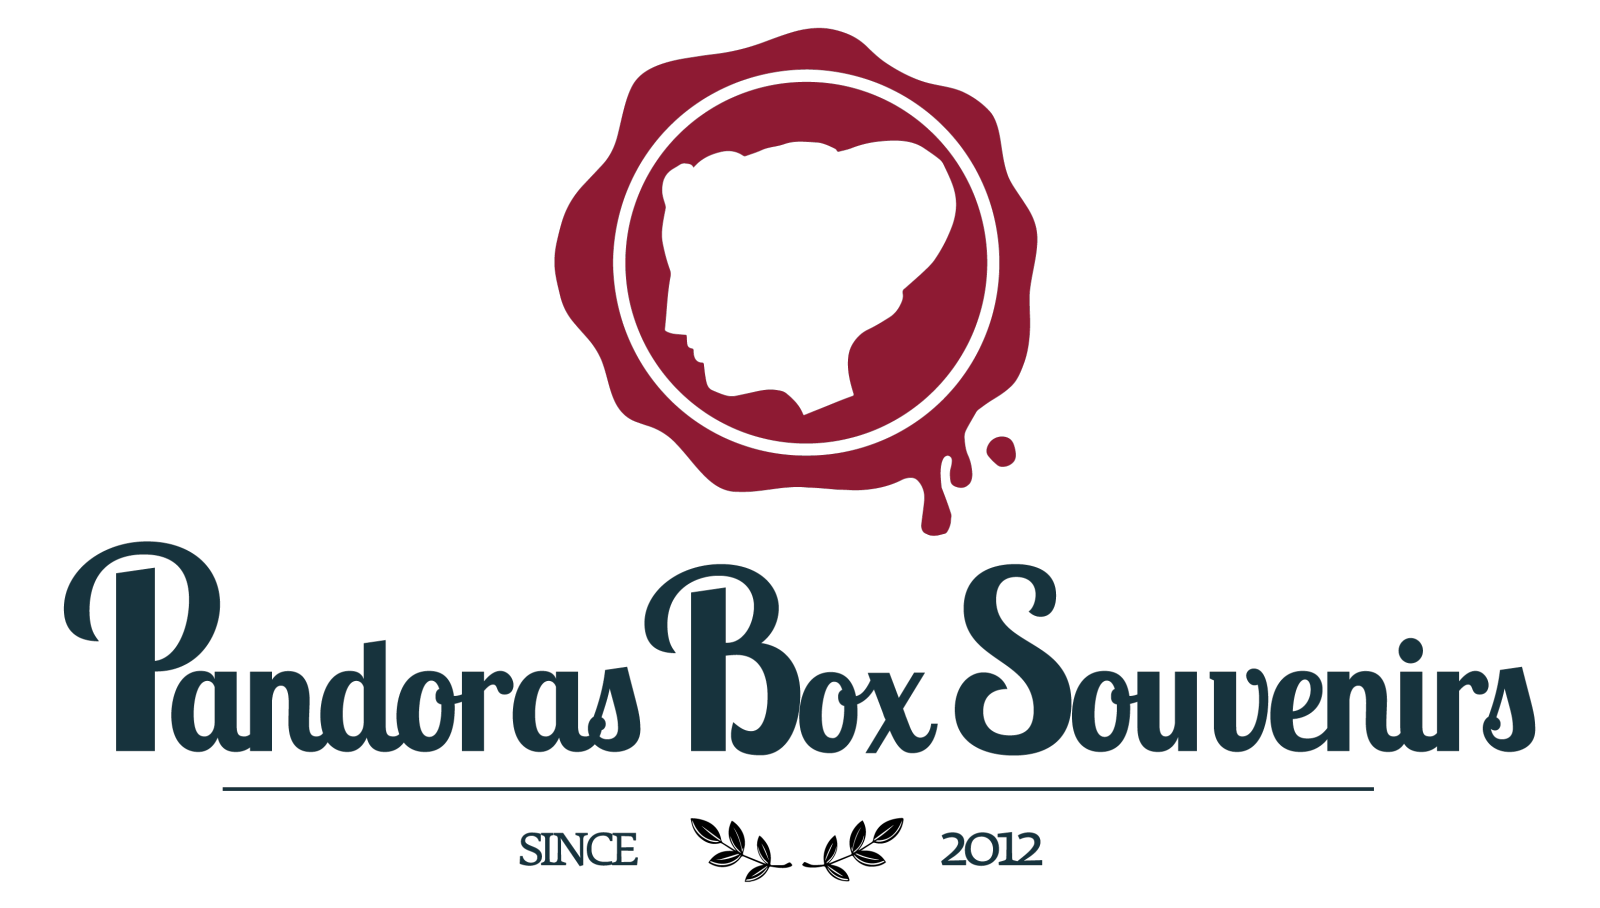 Pandorasboxsouvenirs